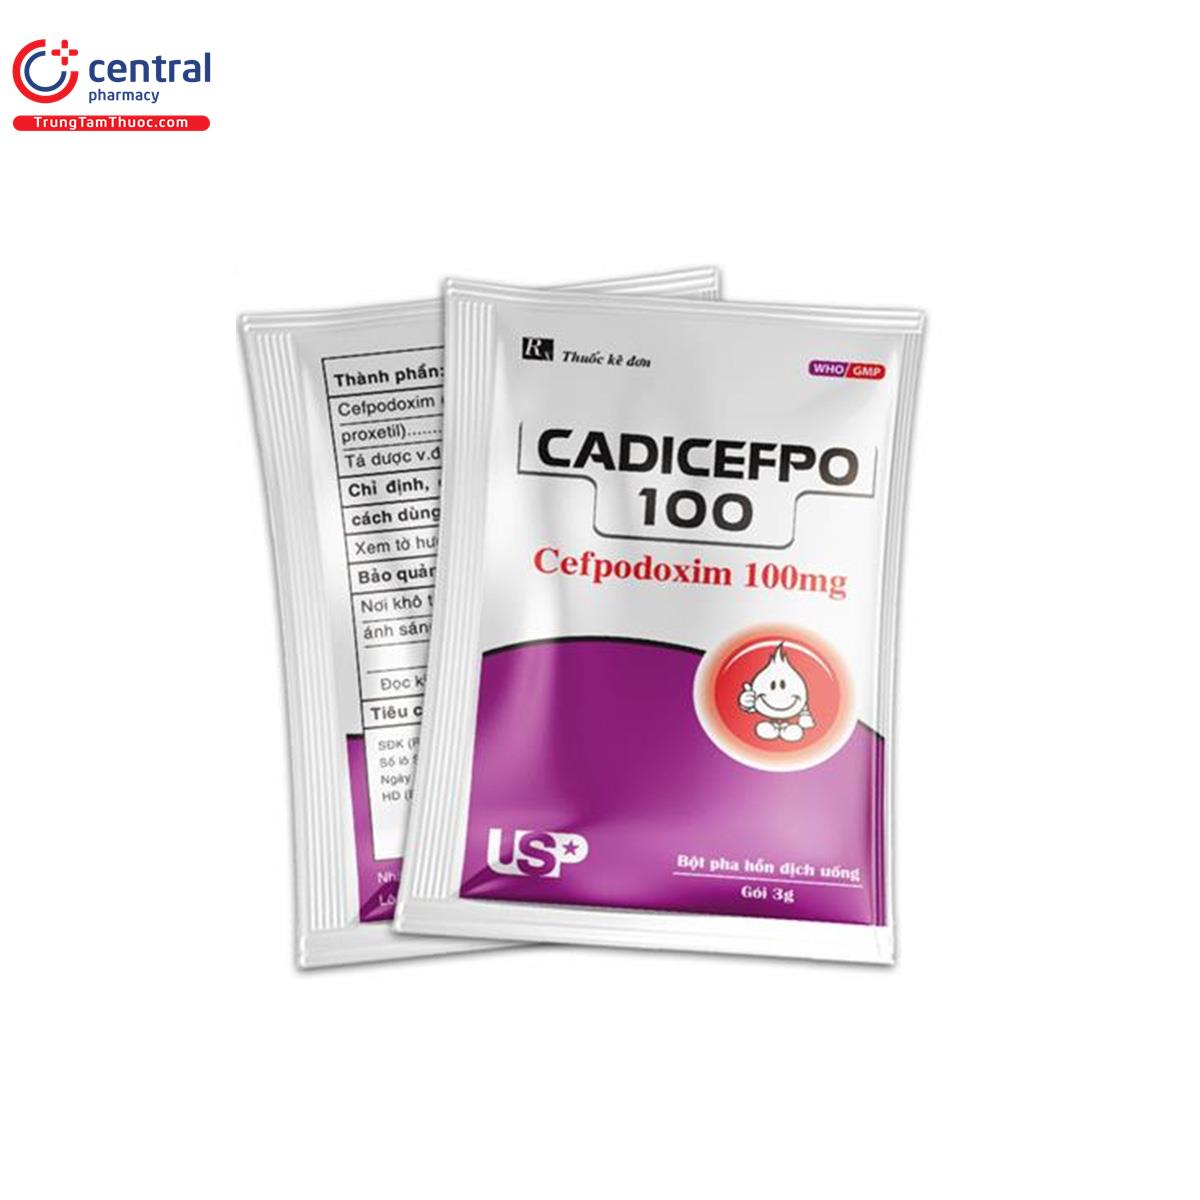 cadicefpo 100 us pharma 5 O5358